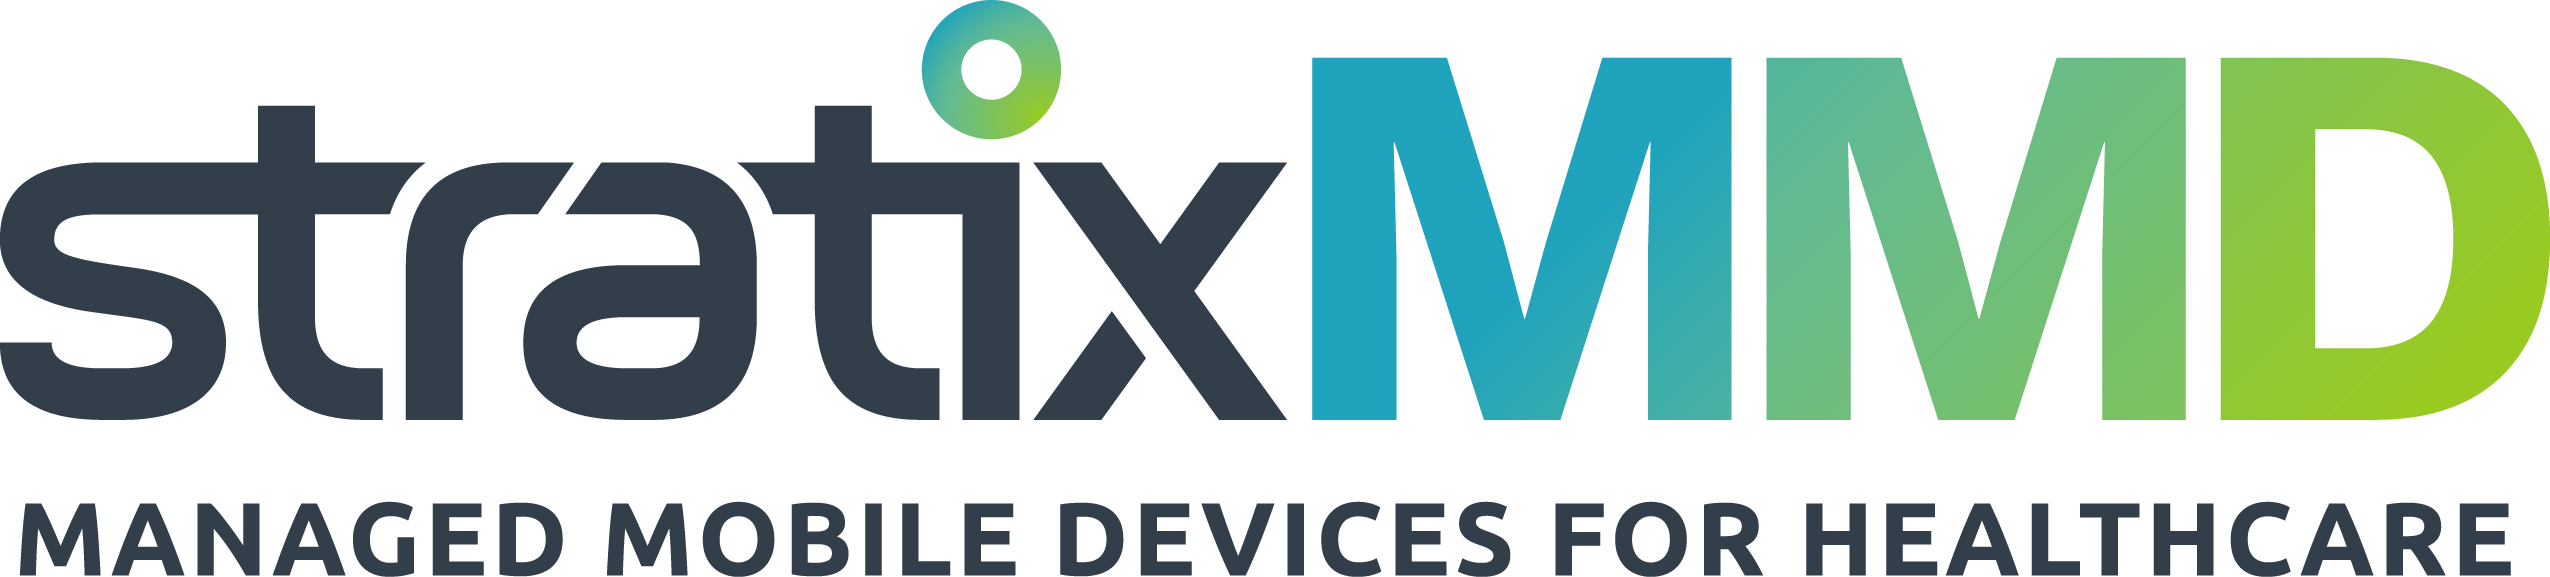 Stratix MMD Logo RGB.jpg